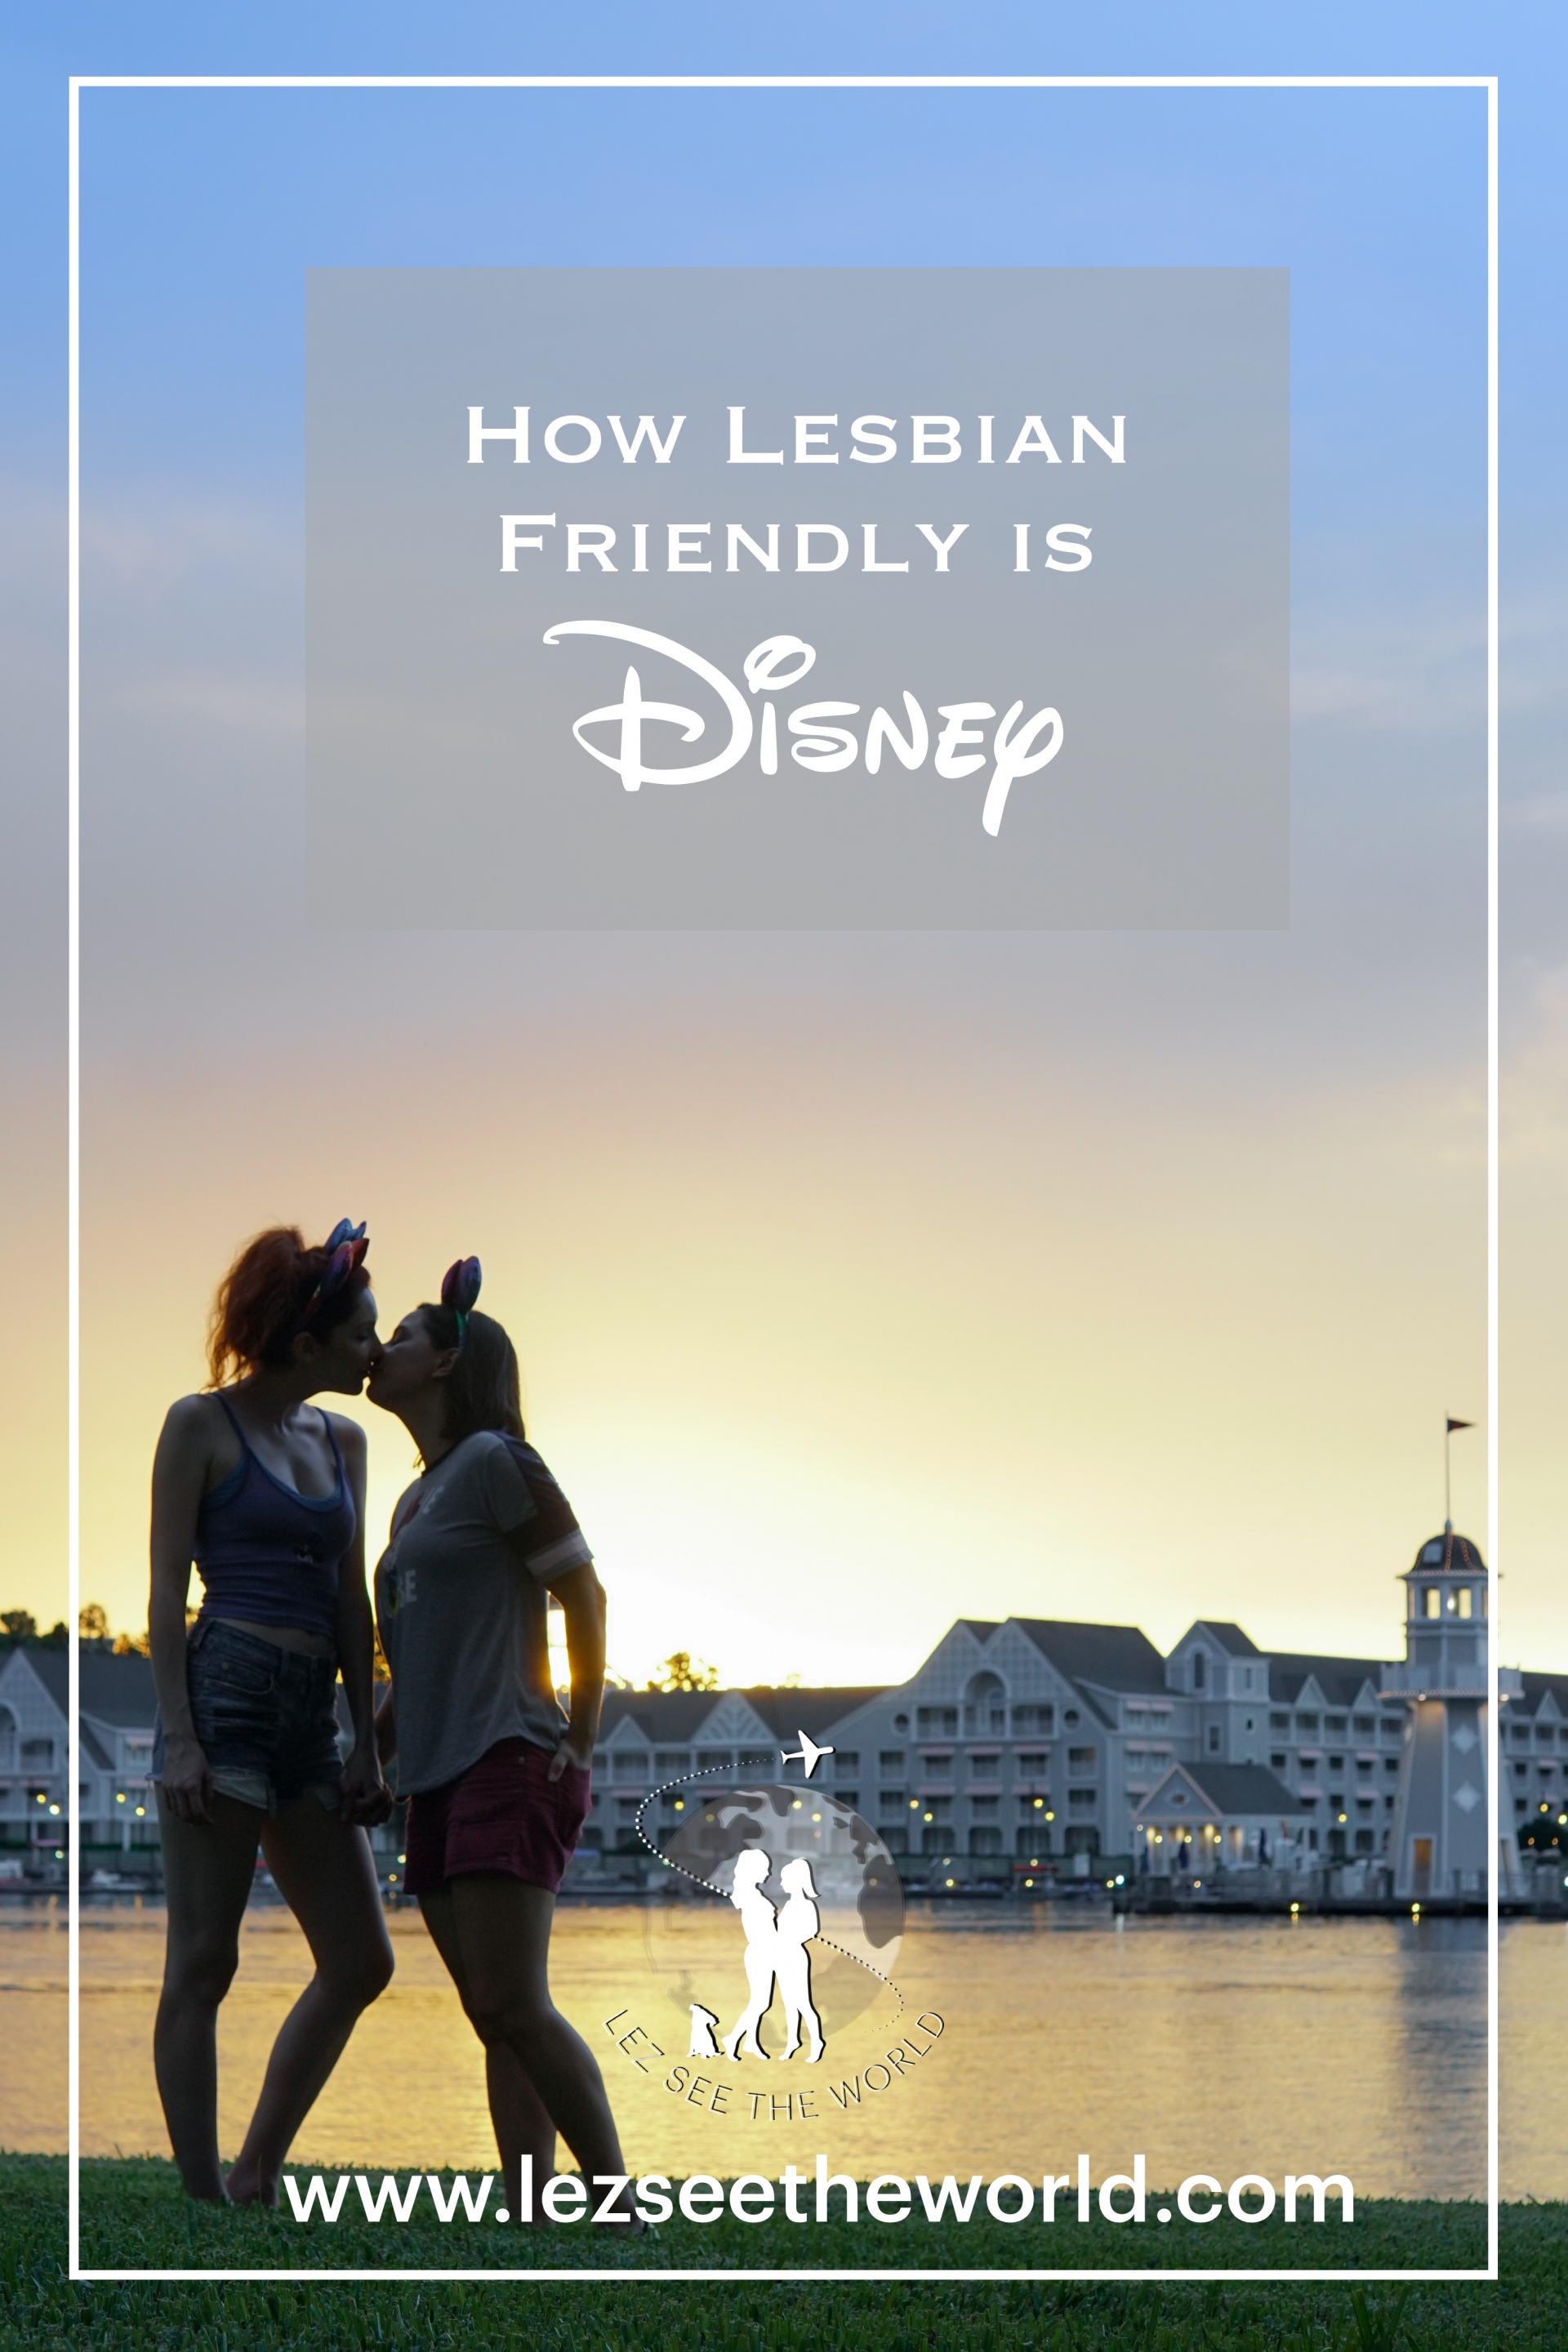 How Lesbian Friendly is Disney